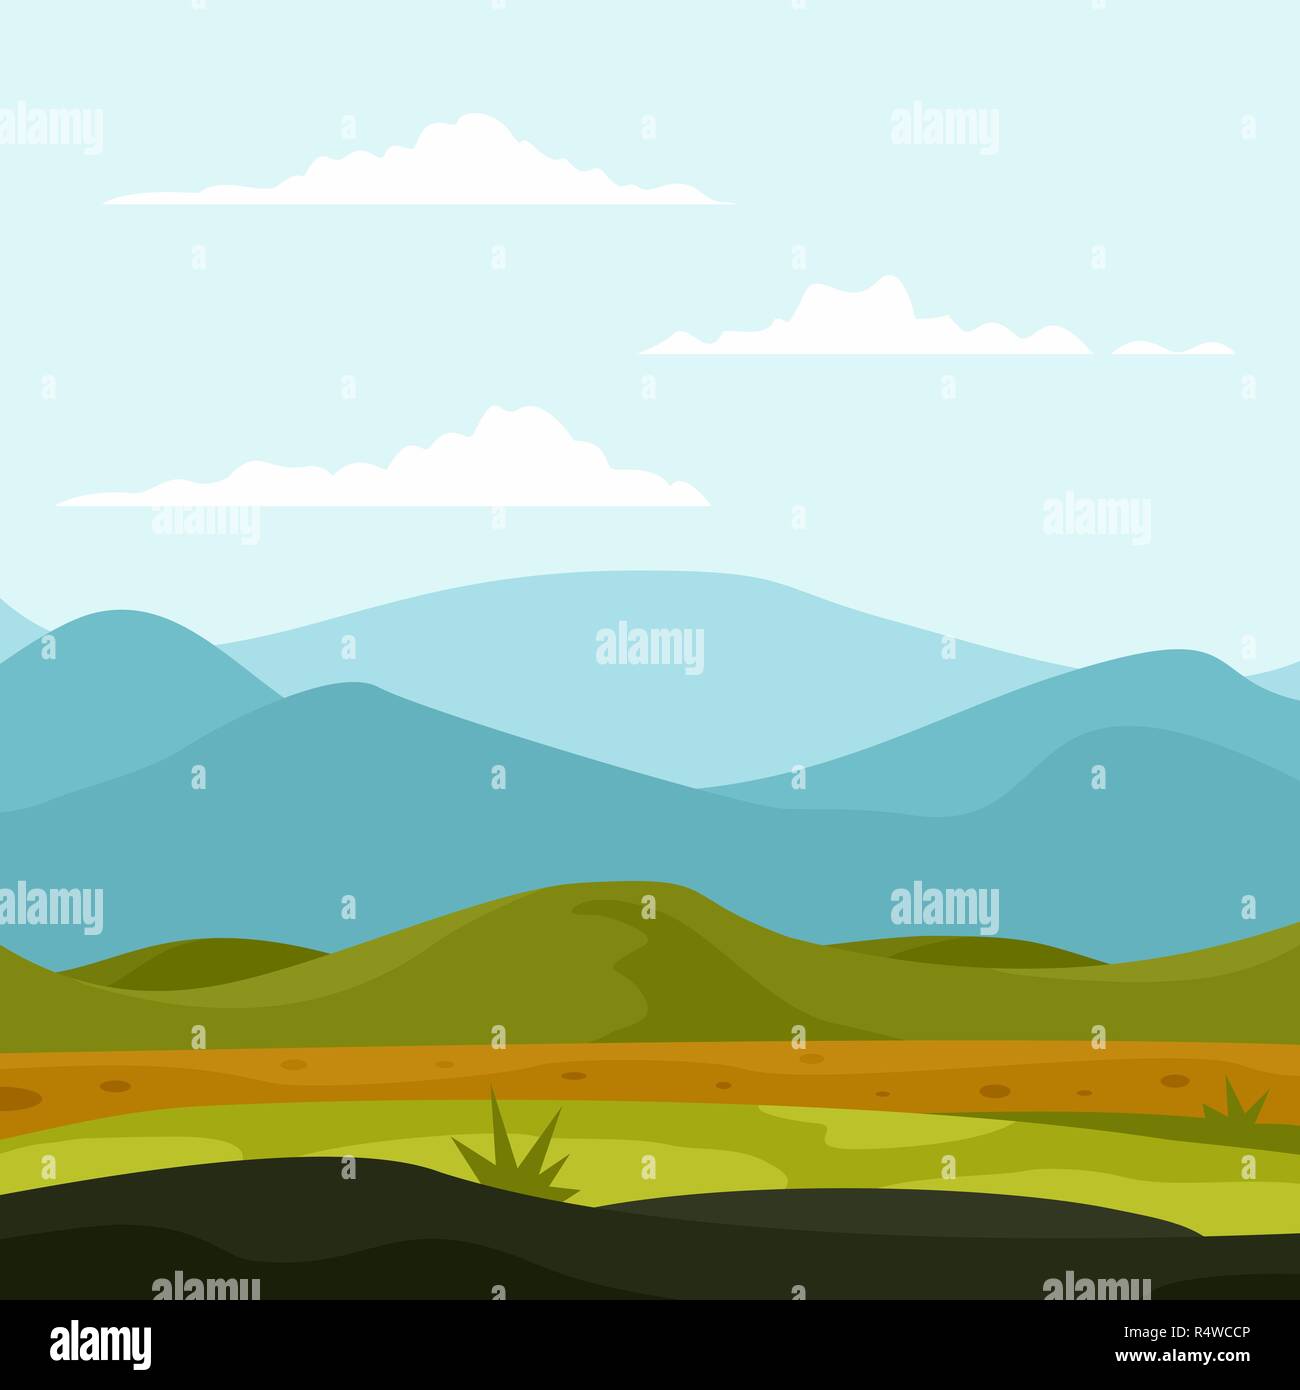 Mountains landscape background. Flat illustration of mountains ...